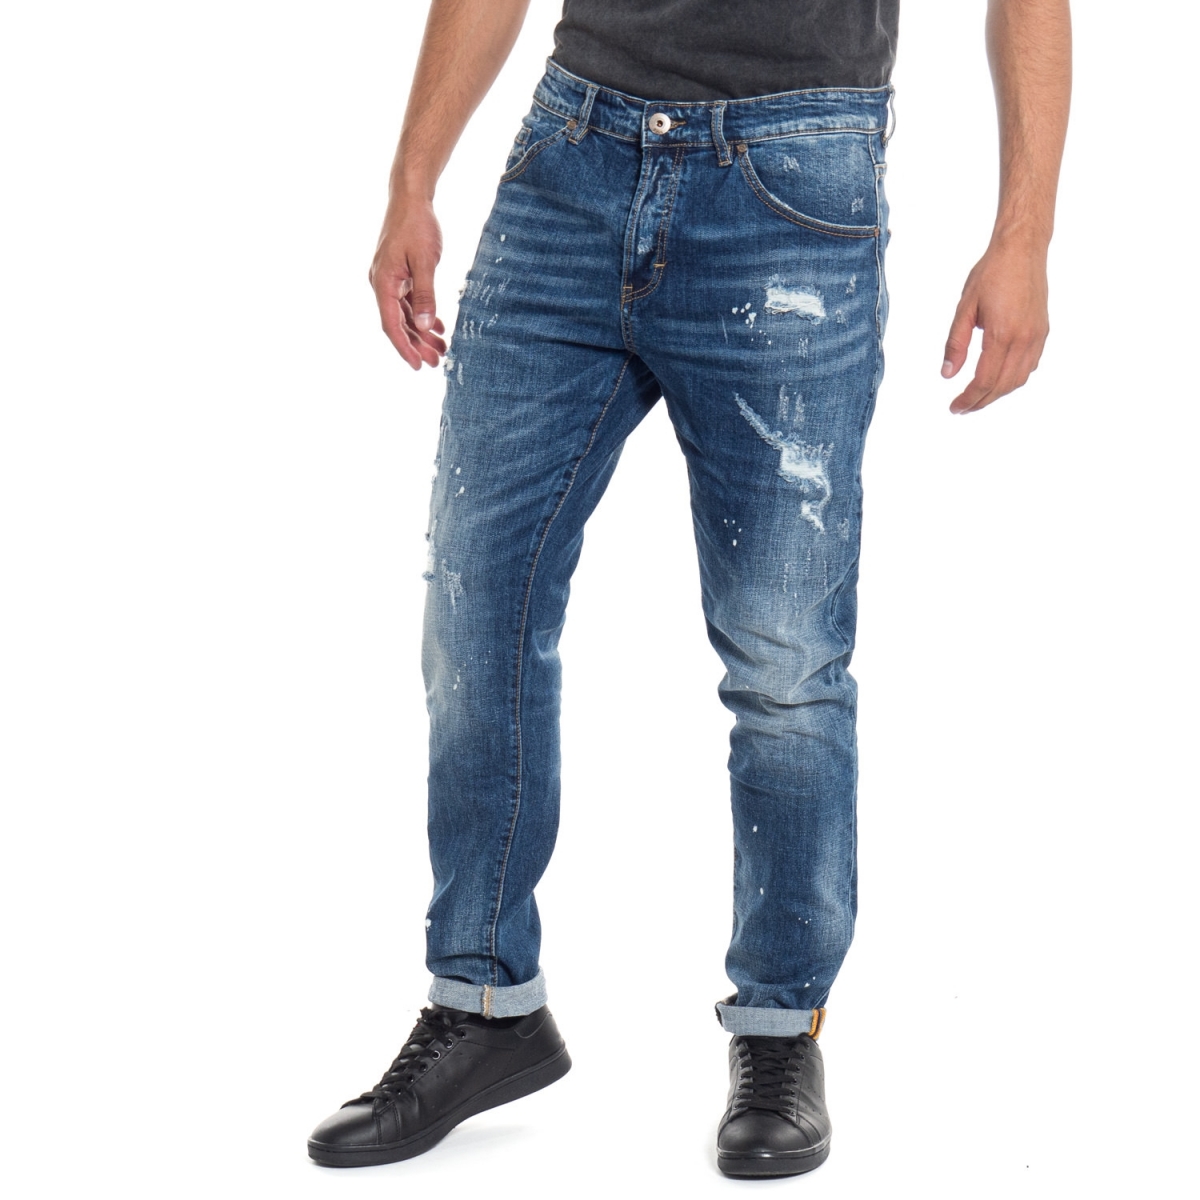 Kleidung Jeans mann Jeans LPY1798 LANDEK PARK Cafedelmar Shop